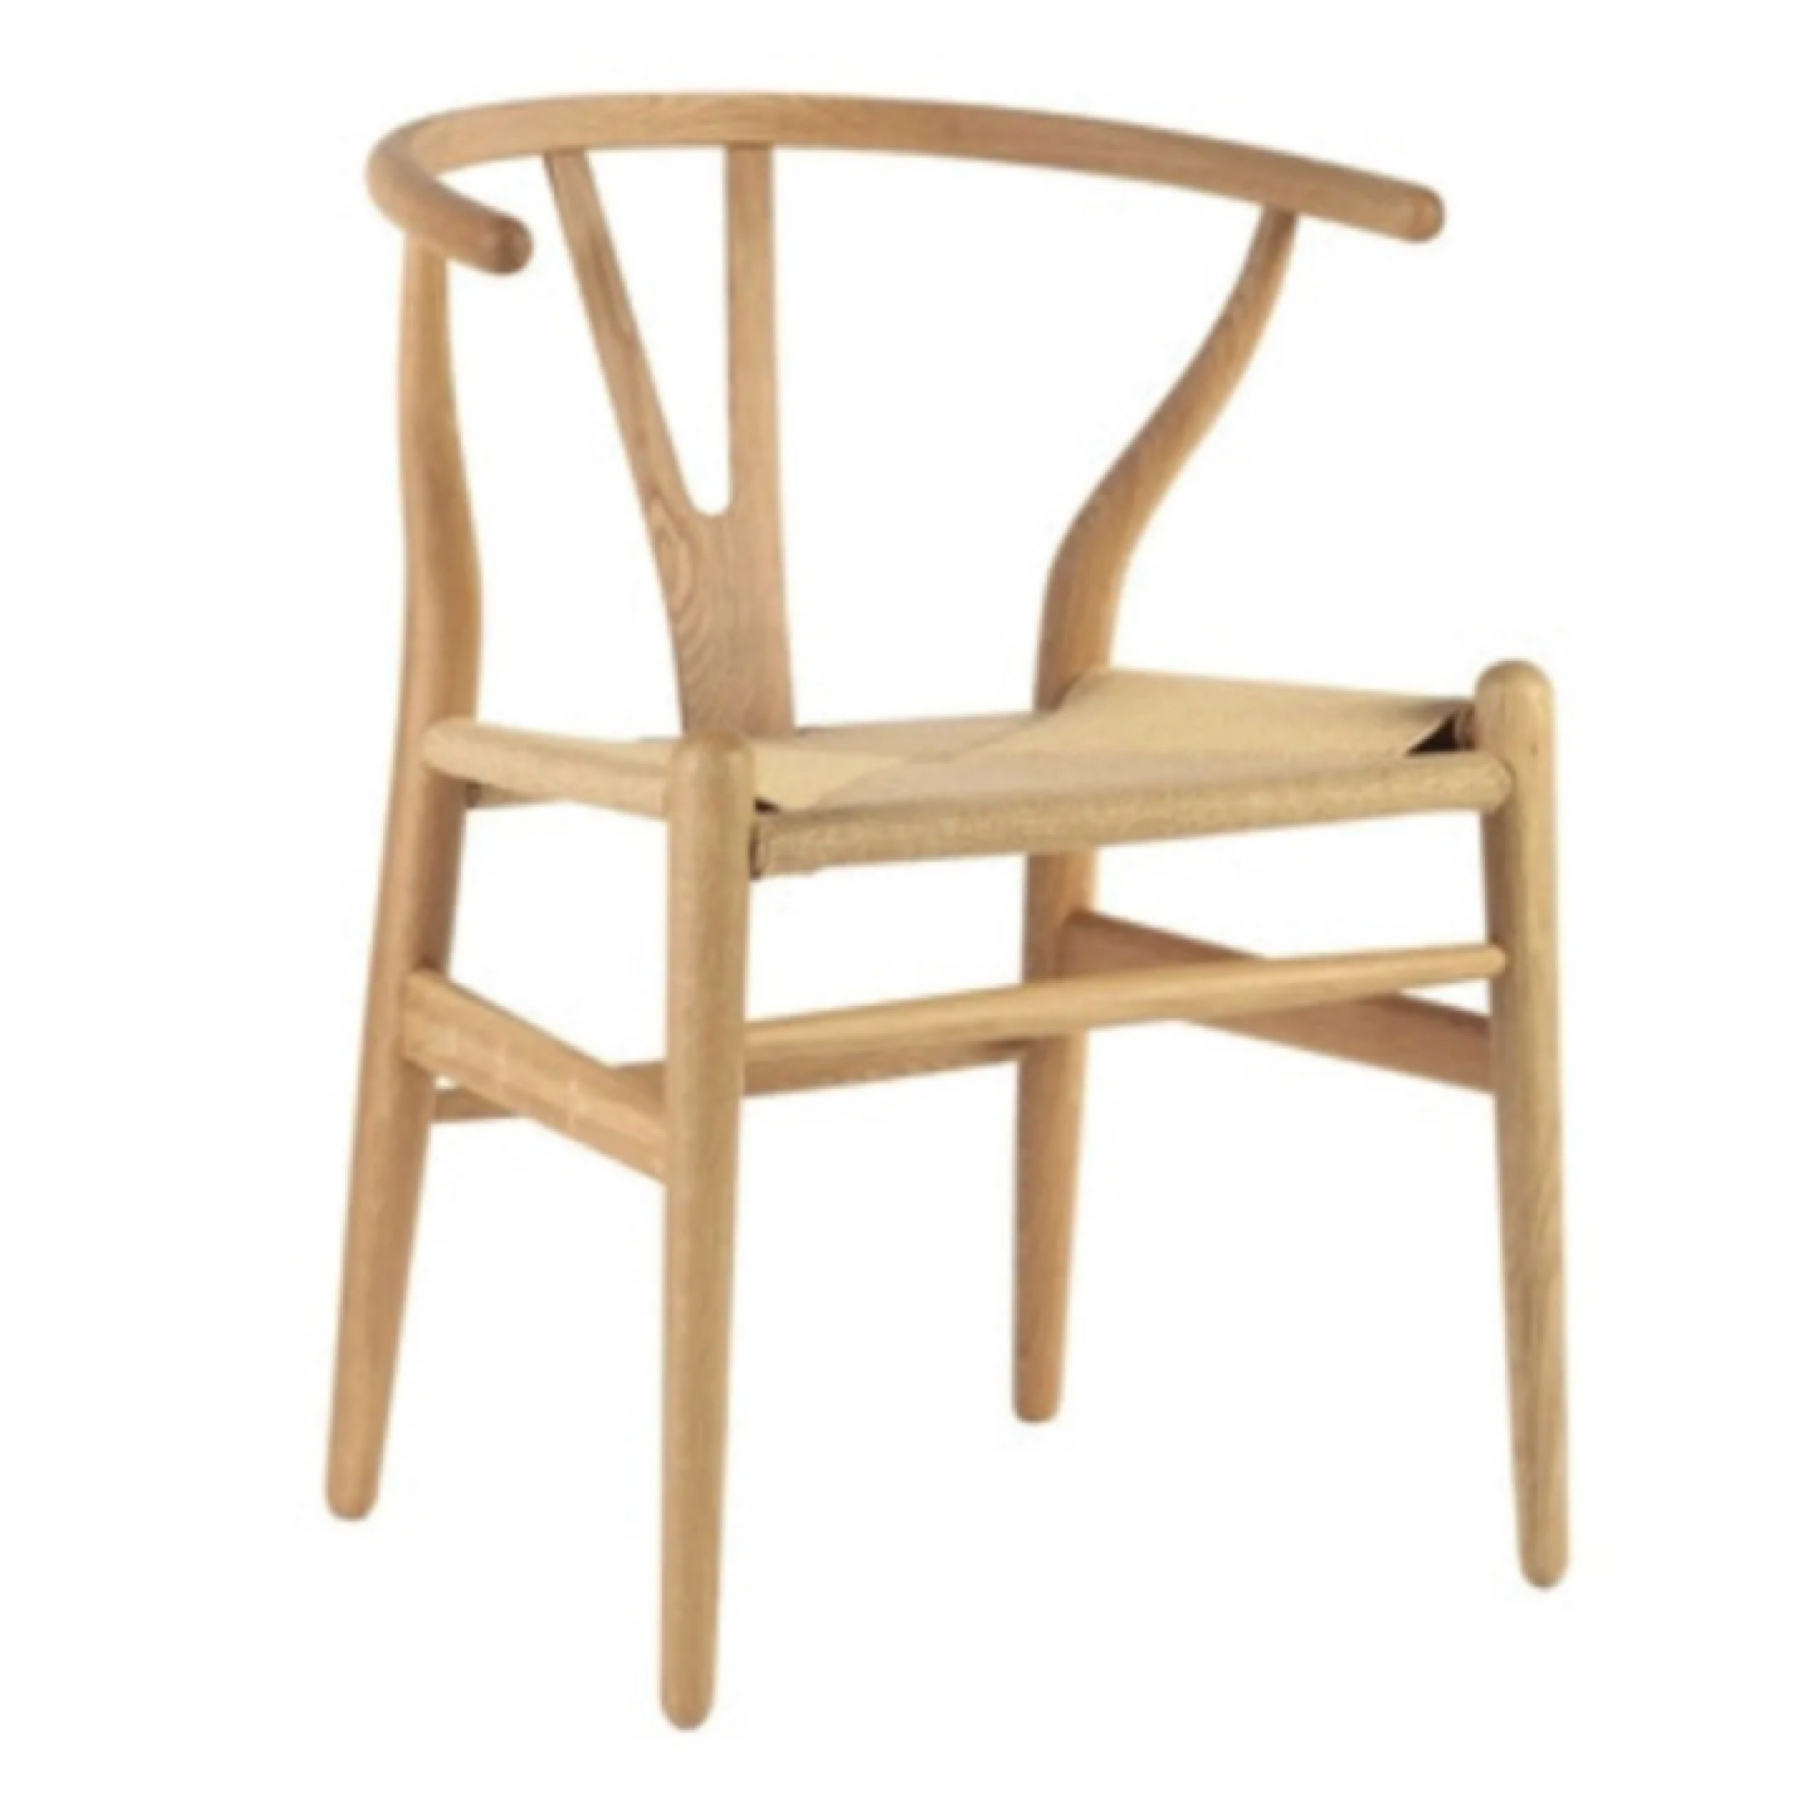 TR20005 Wishbone Chair